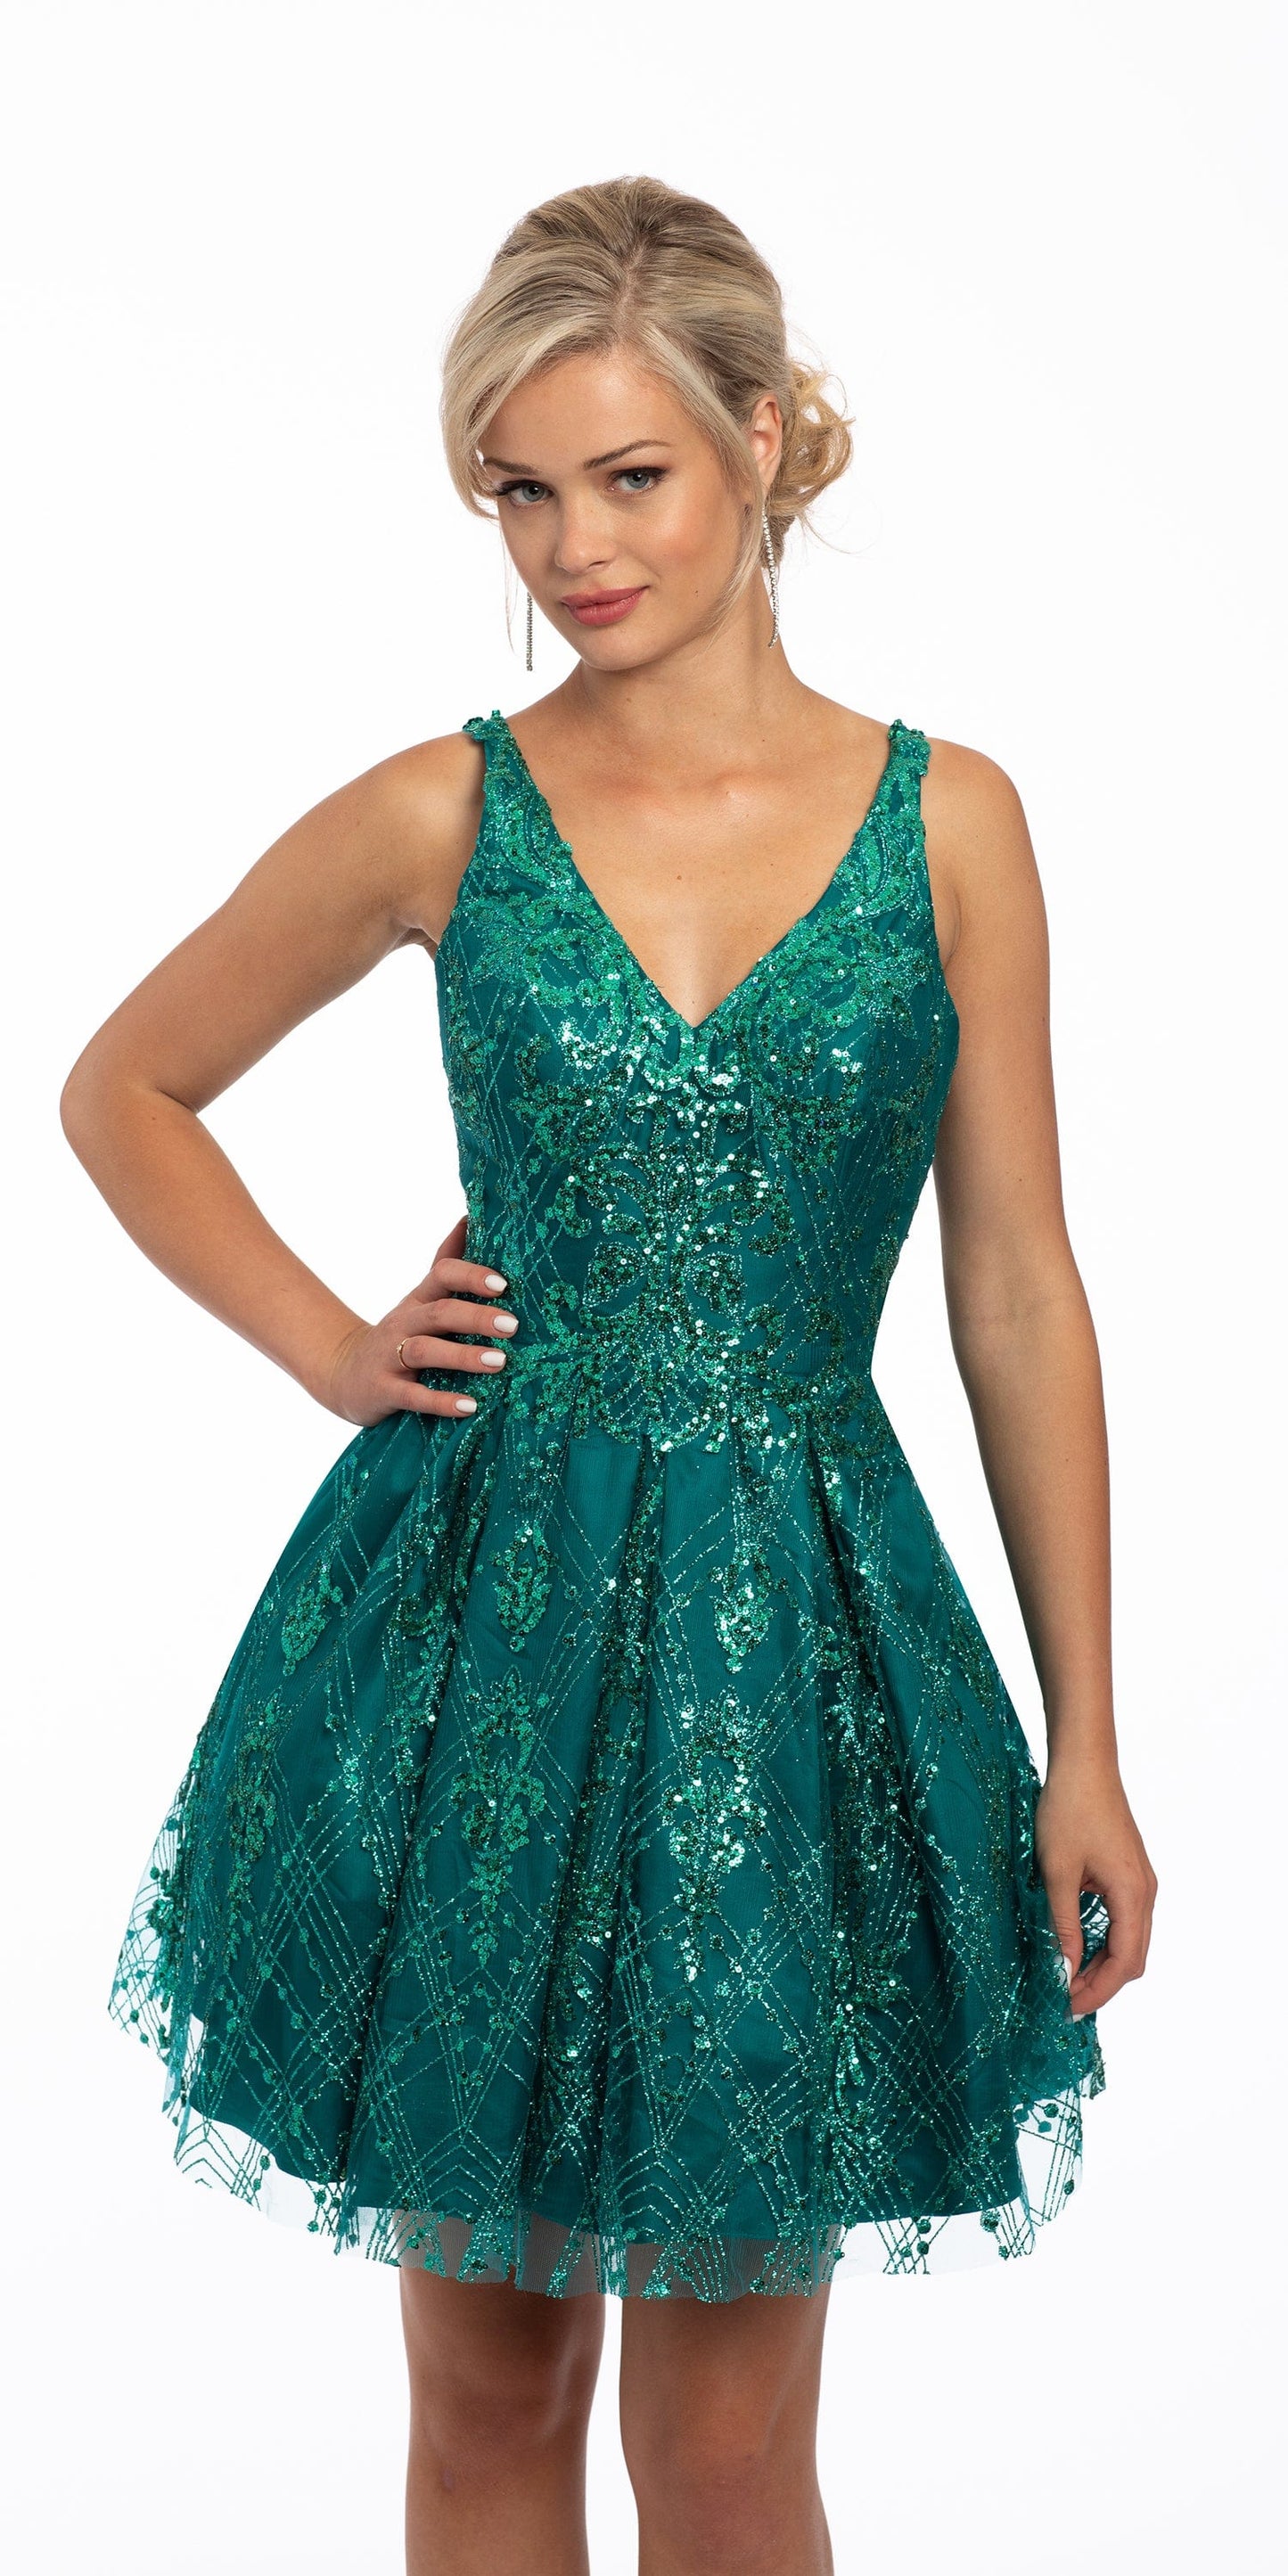 Camille La Vie Sequin Glitter Criss Cross Fit and Flare Dress missy / 12 / emerald